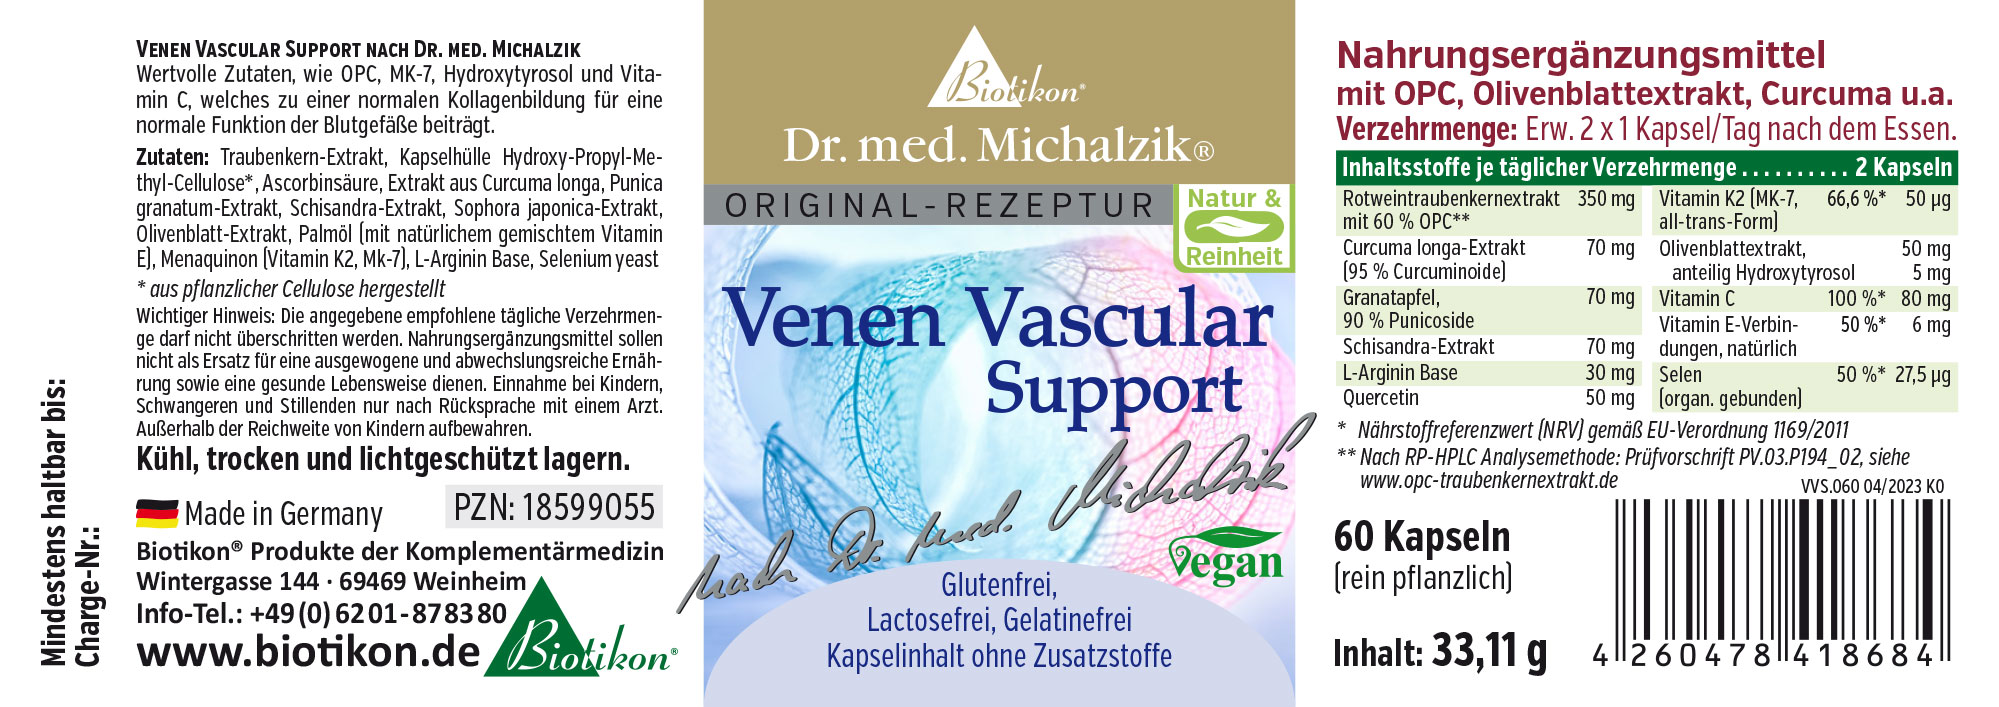 Vascular Veins Support